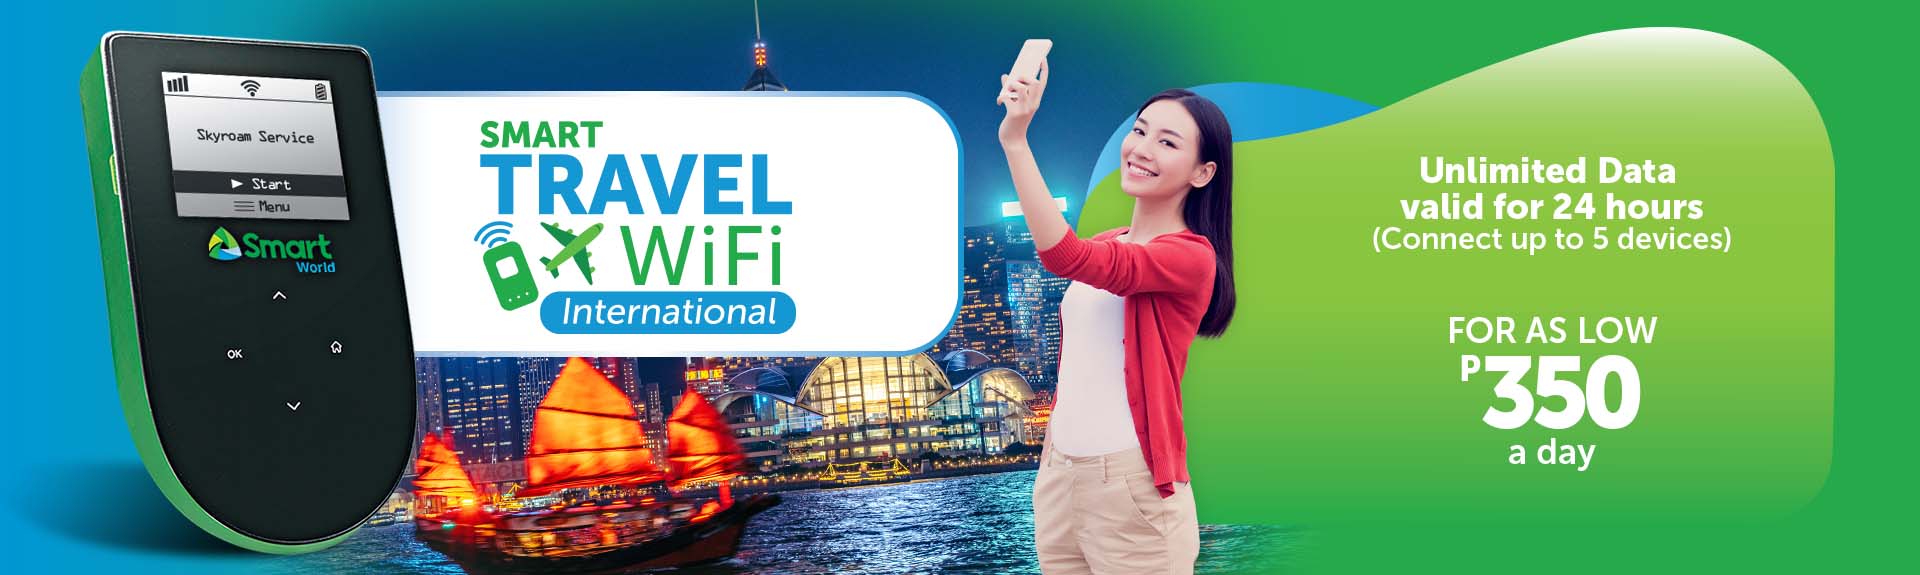 TravelWiFiIntl2_1920x575px_WOButton_REWEB_HK